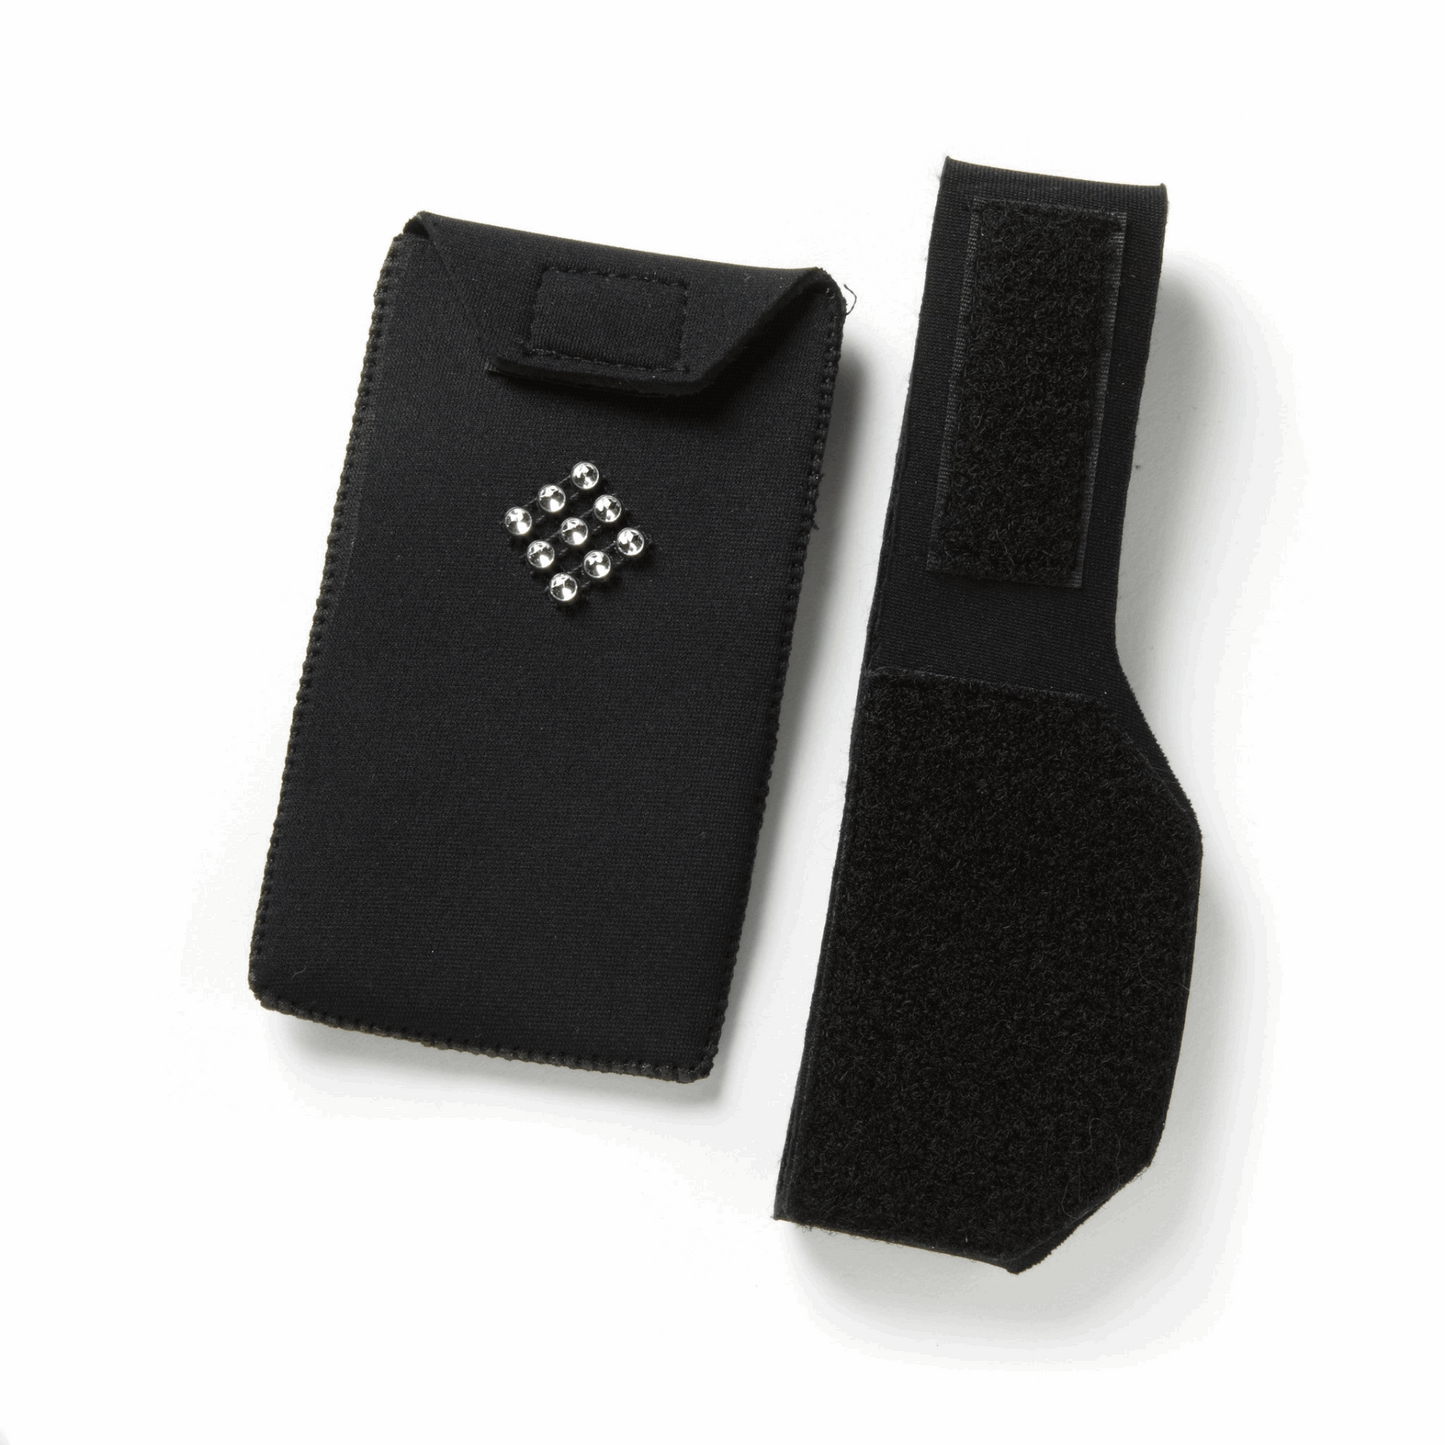 *bling!* PortaPocket Combo Kit ~ arm or leg stash that's handy for your cell phone